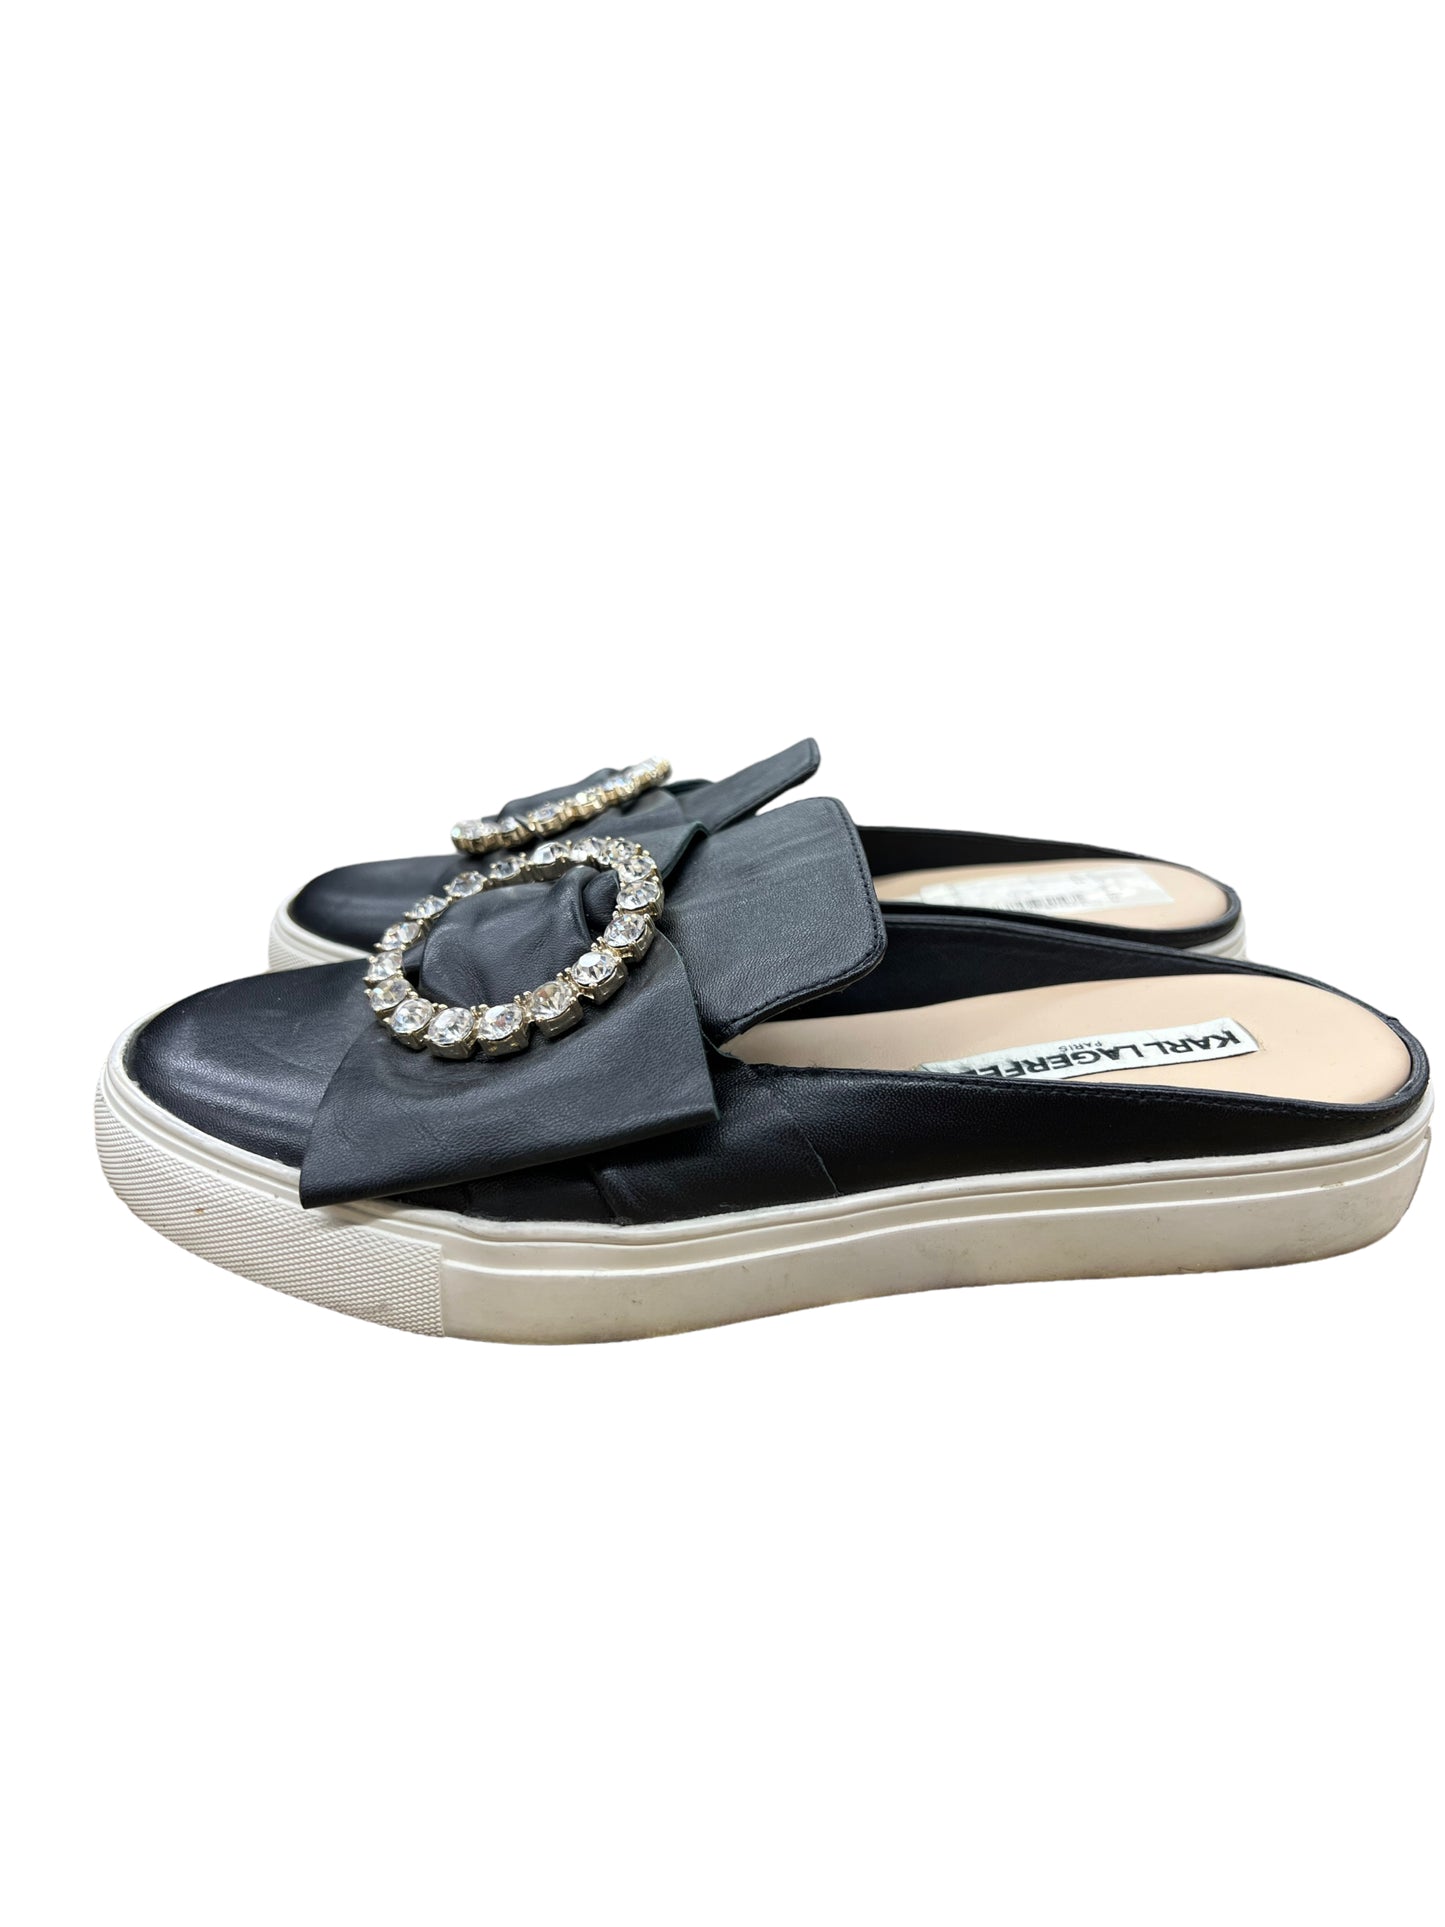 Shoes Flats Mule & Slide By Karl Lagerfeld  Size: 7.5